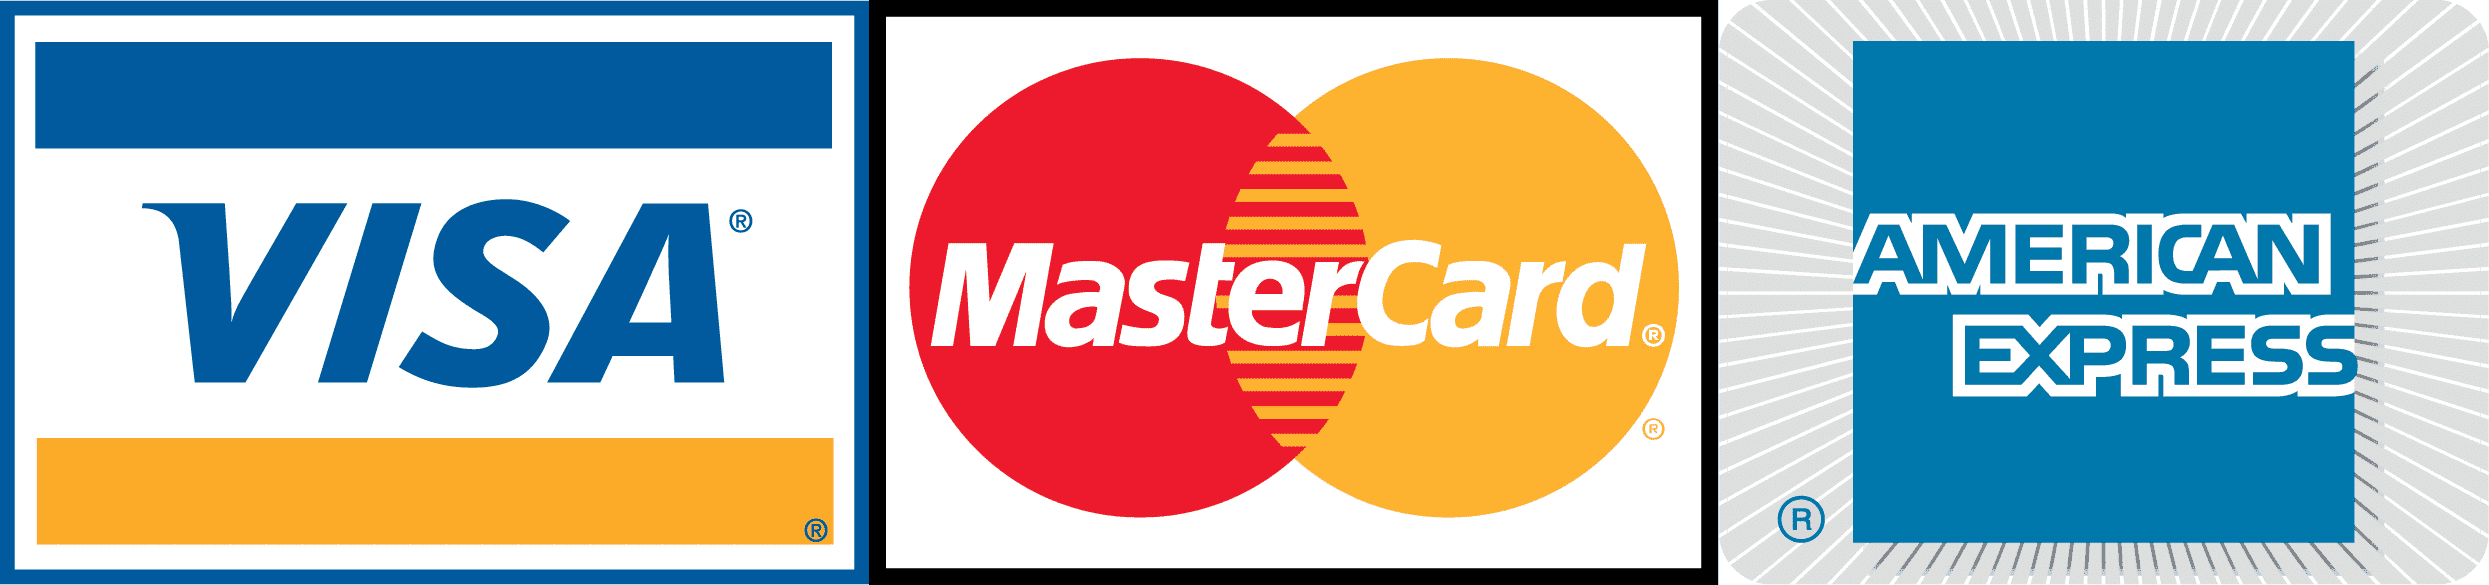 mastercard-payment-visa-credit-card